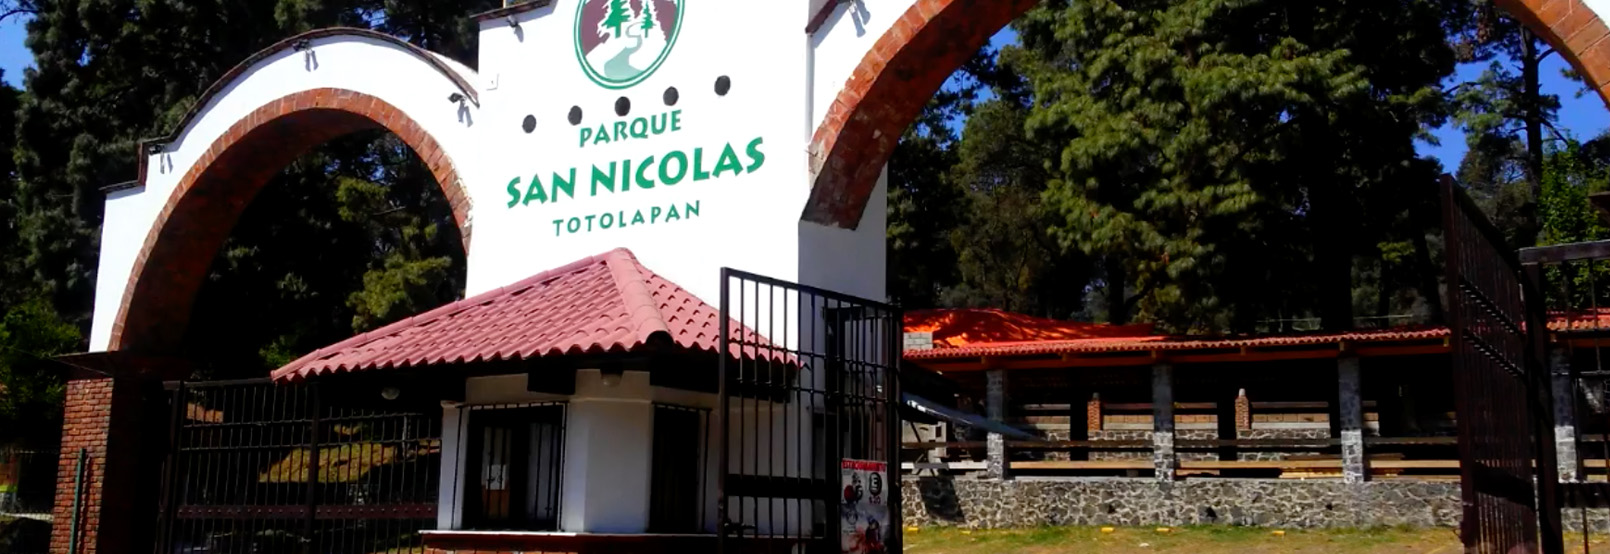 Parque Ecologico San Nicolas Totolapan 1